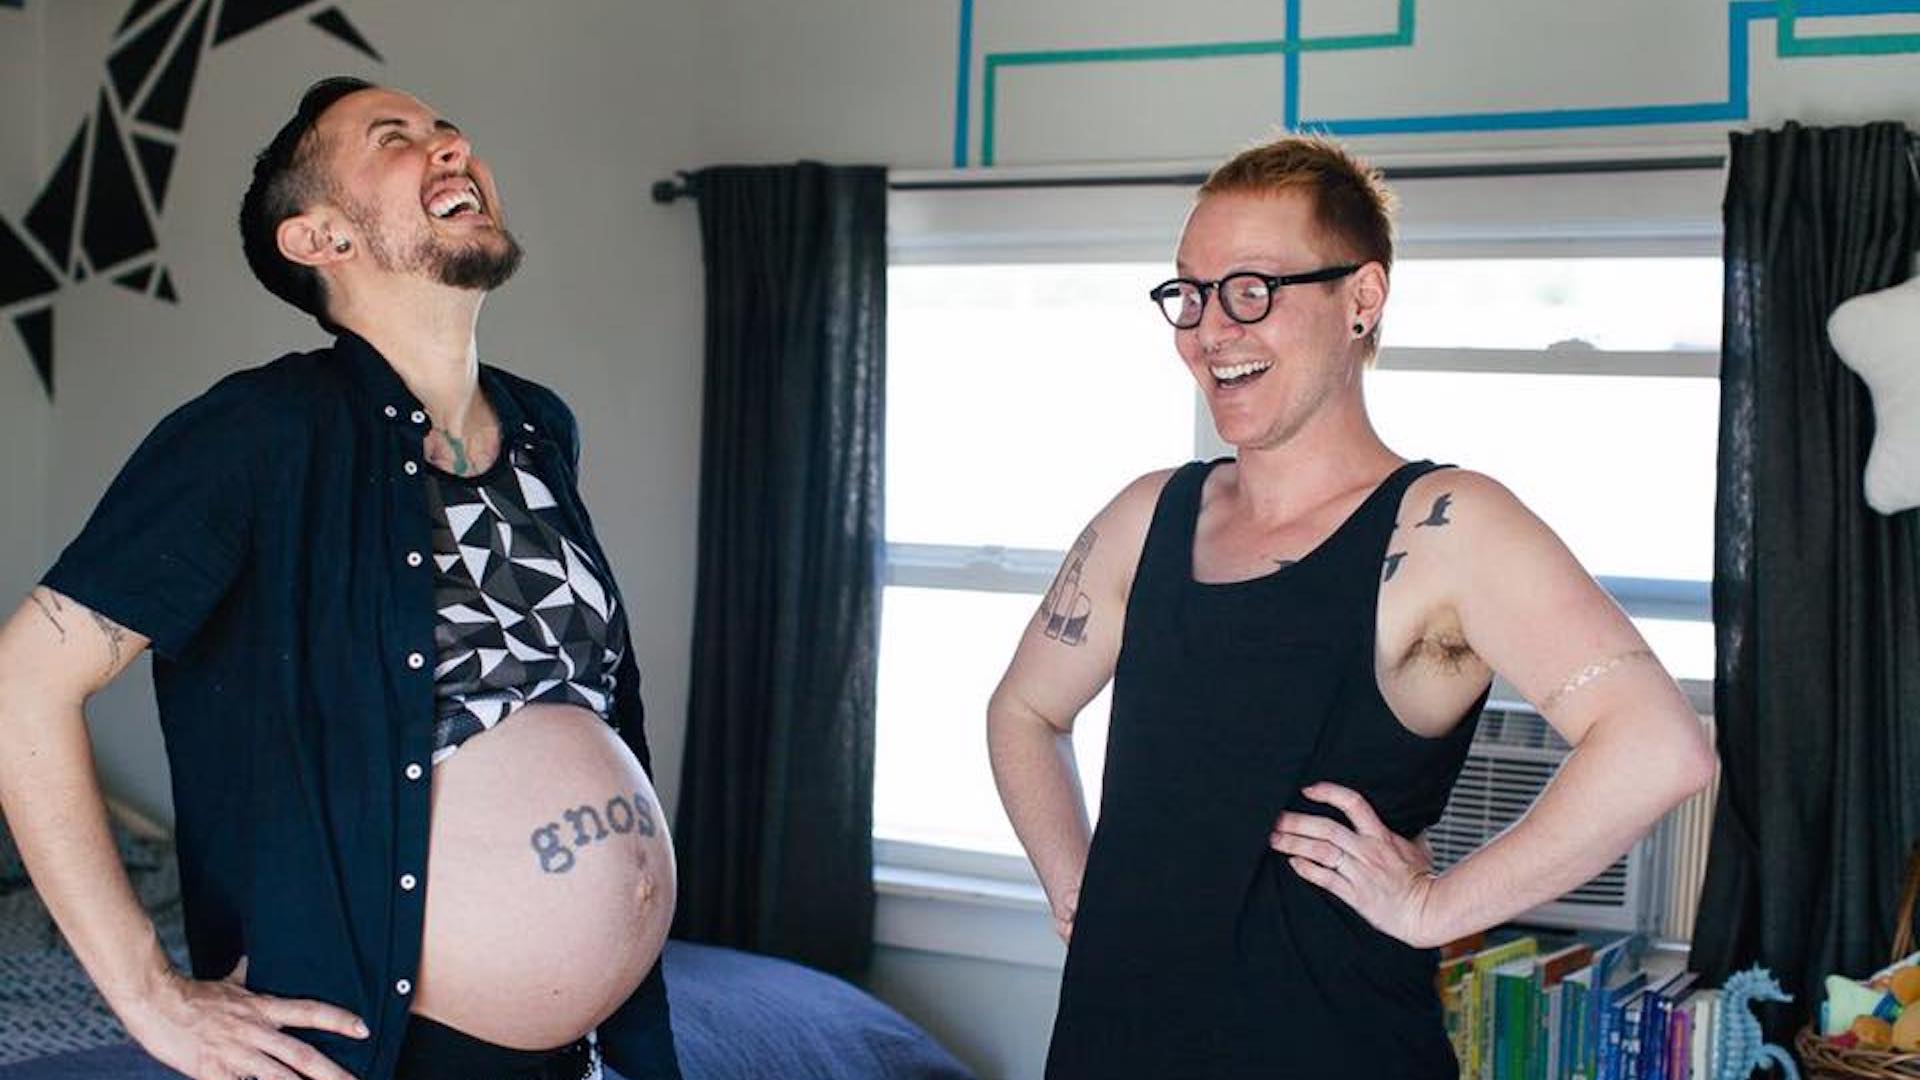 Transgender man gives birth to baby boy.